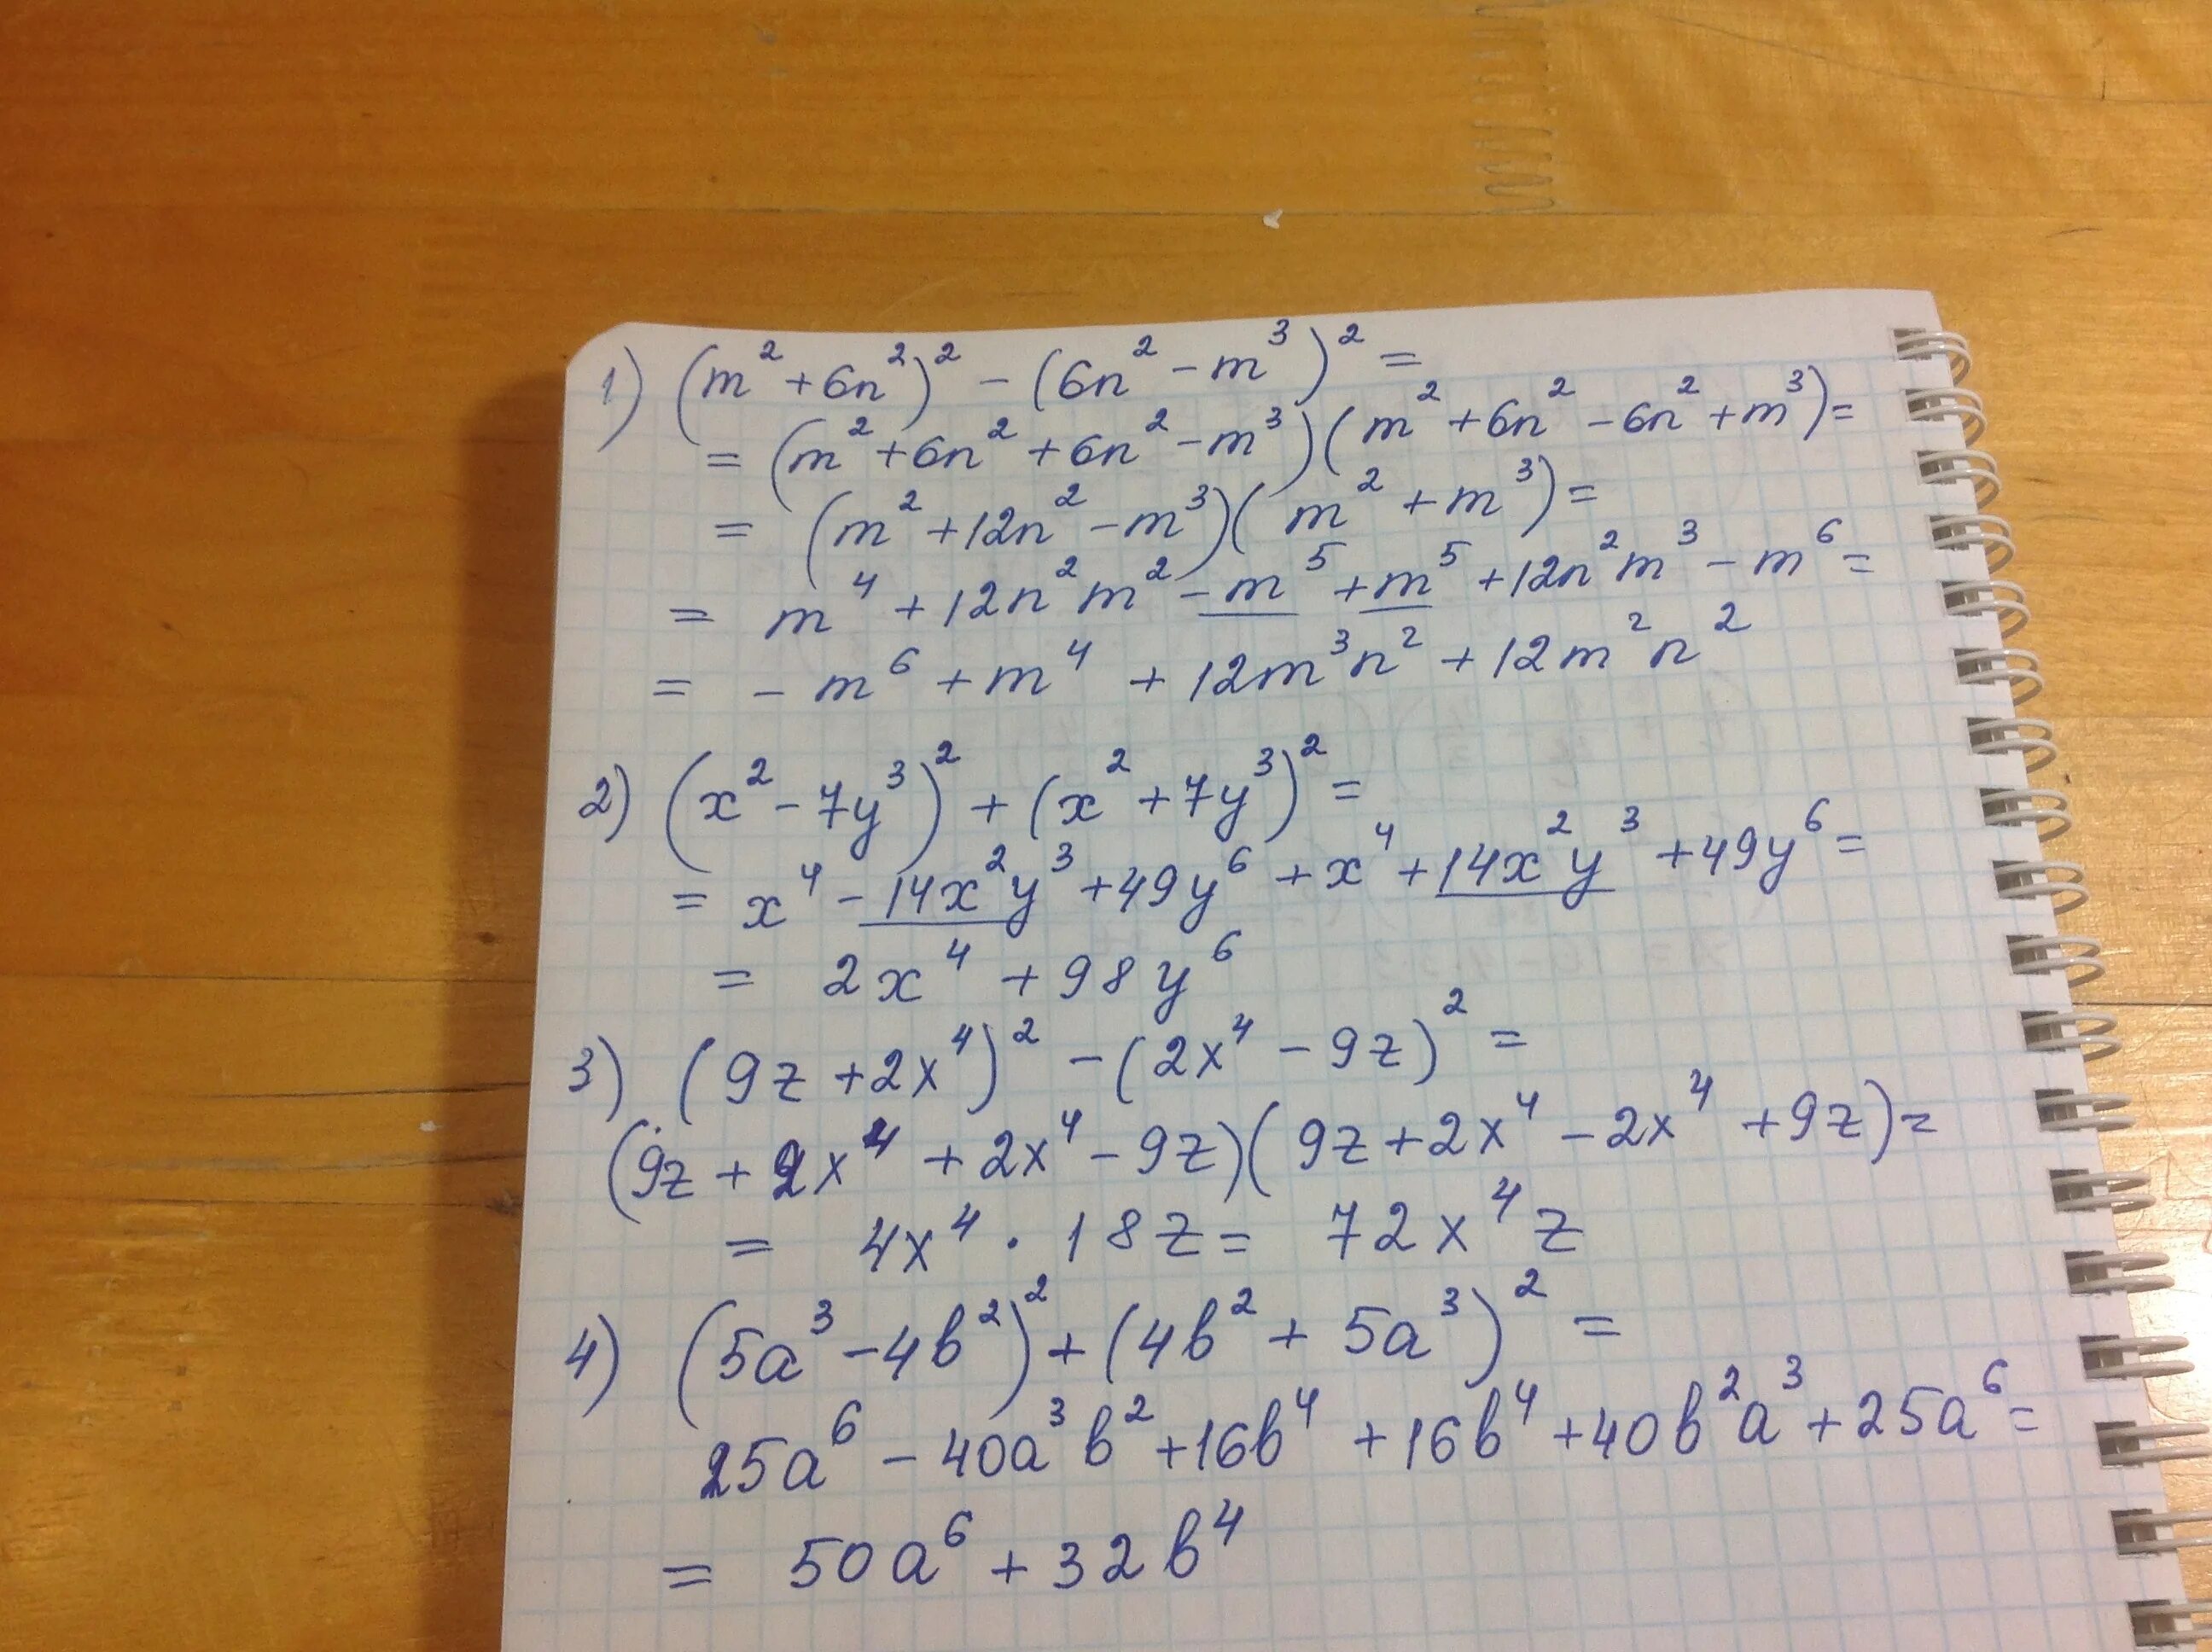 Упростите выражение x 2x 0 5. (M+2)2 - (3m + 3)2 = 0. Упростите выражение 1 m n 1 m n 2 3m 3n. (0-3)^2+(5-2)^2. (3x+1)^2+(x-7)^2.